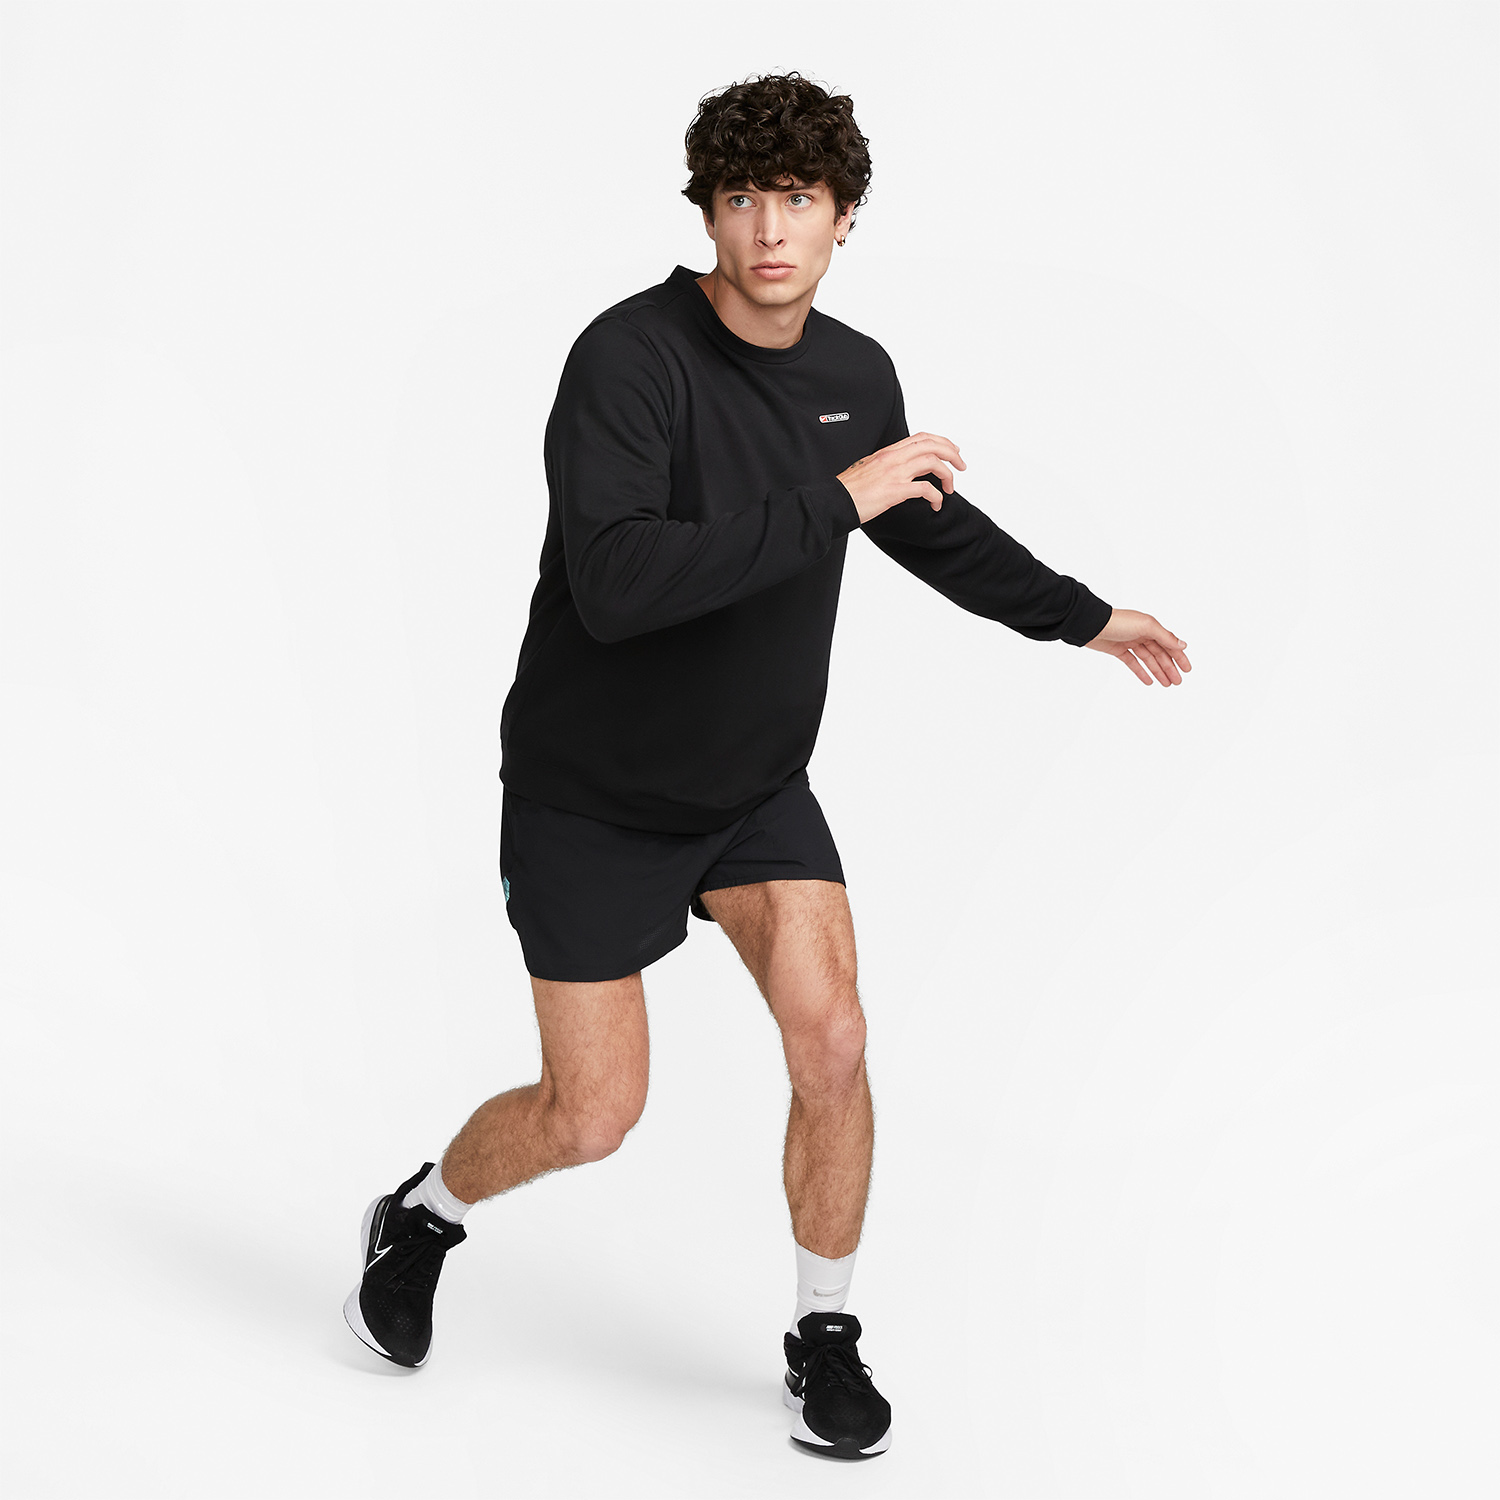 Nike Track Club Men's Running Shirt - Black/Summit White